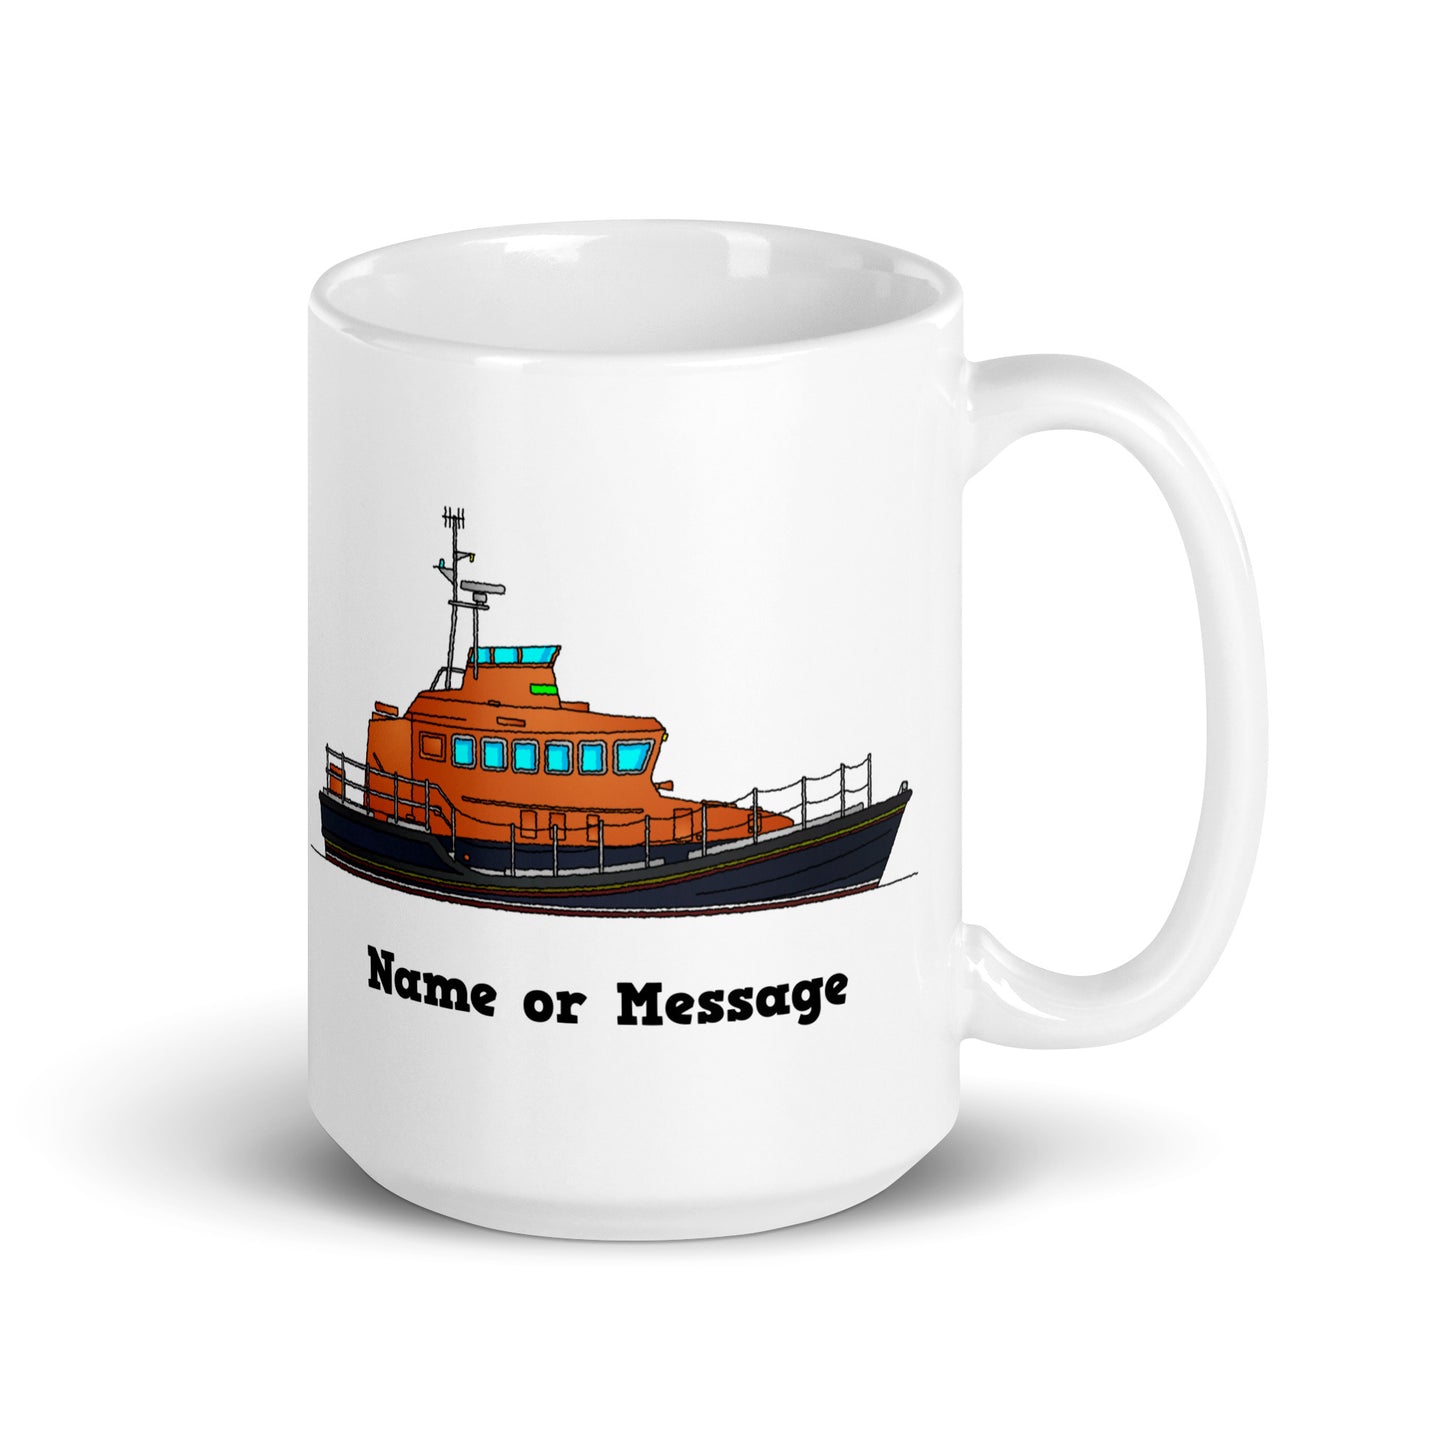 Personalized RNLI Lifeboat Mug